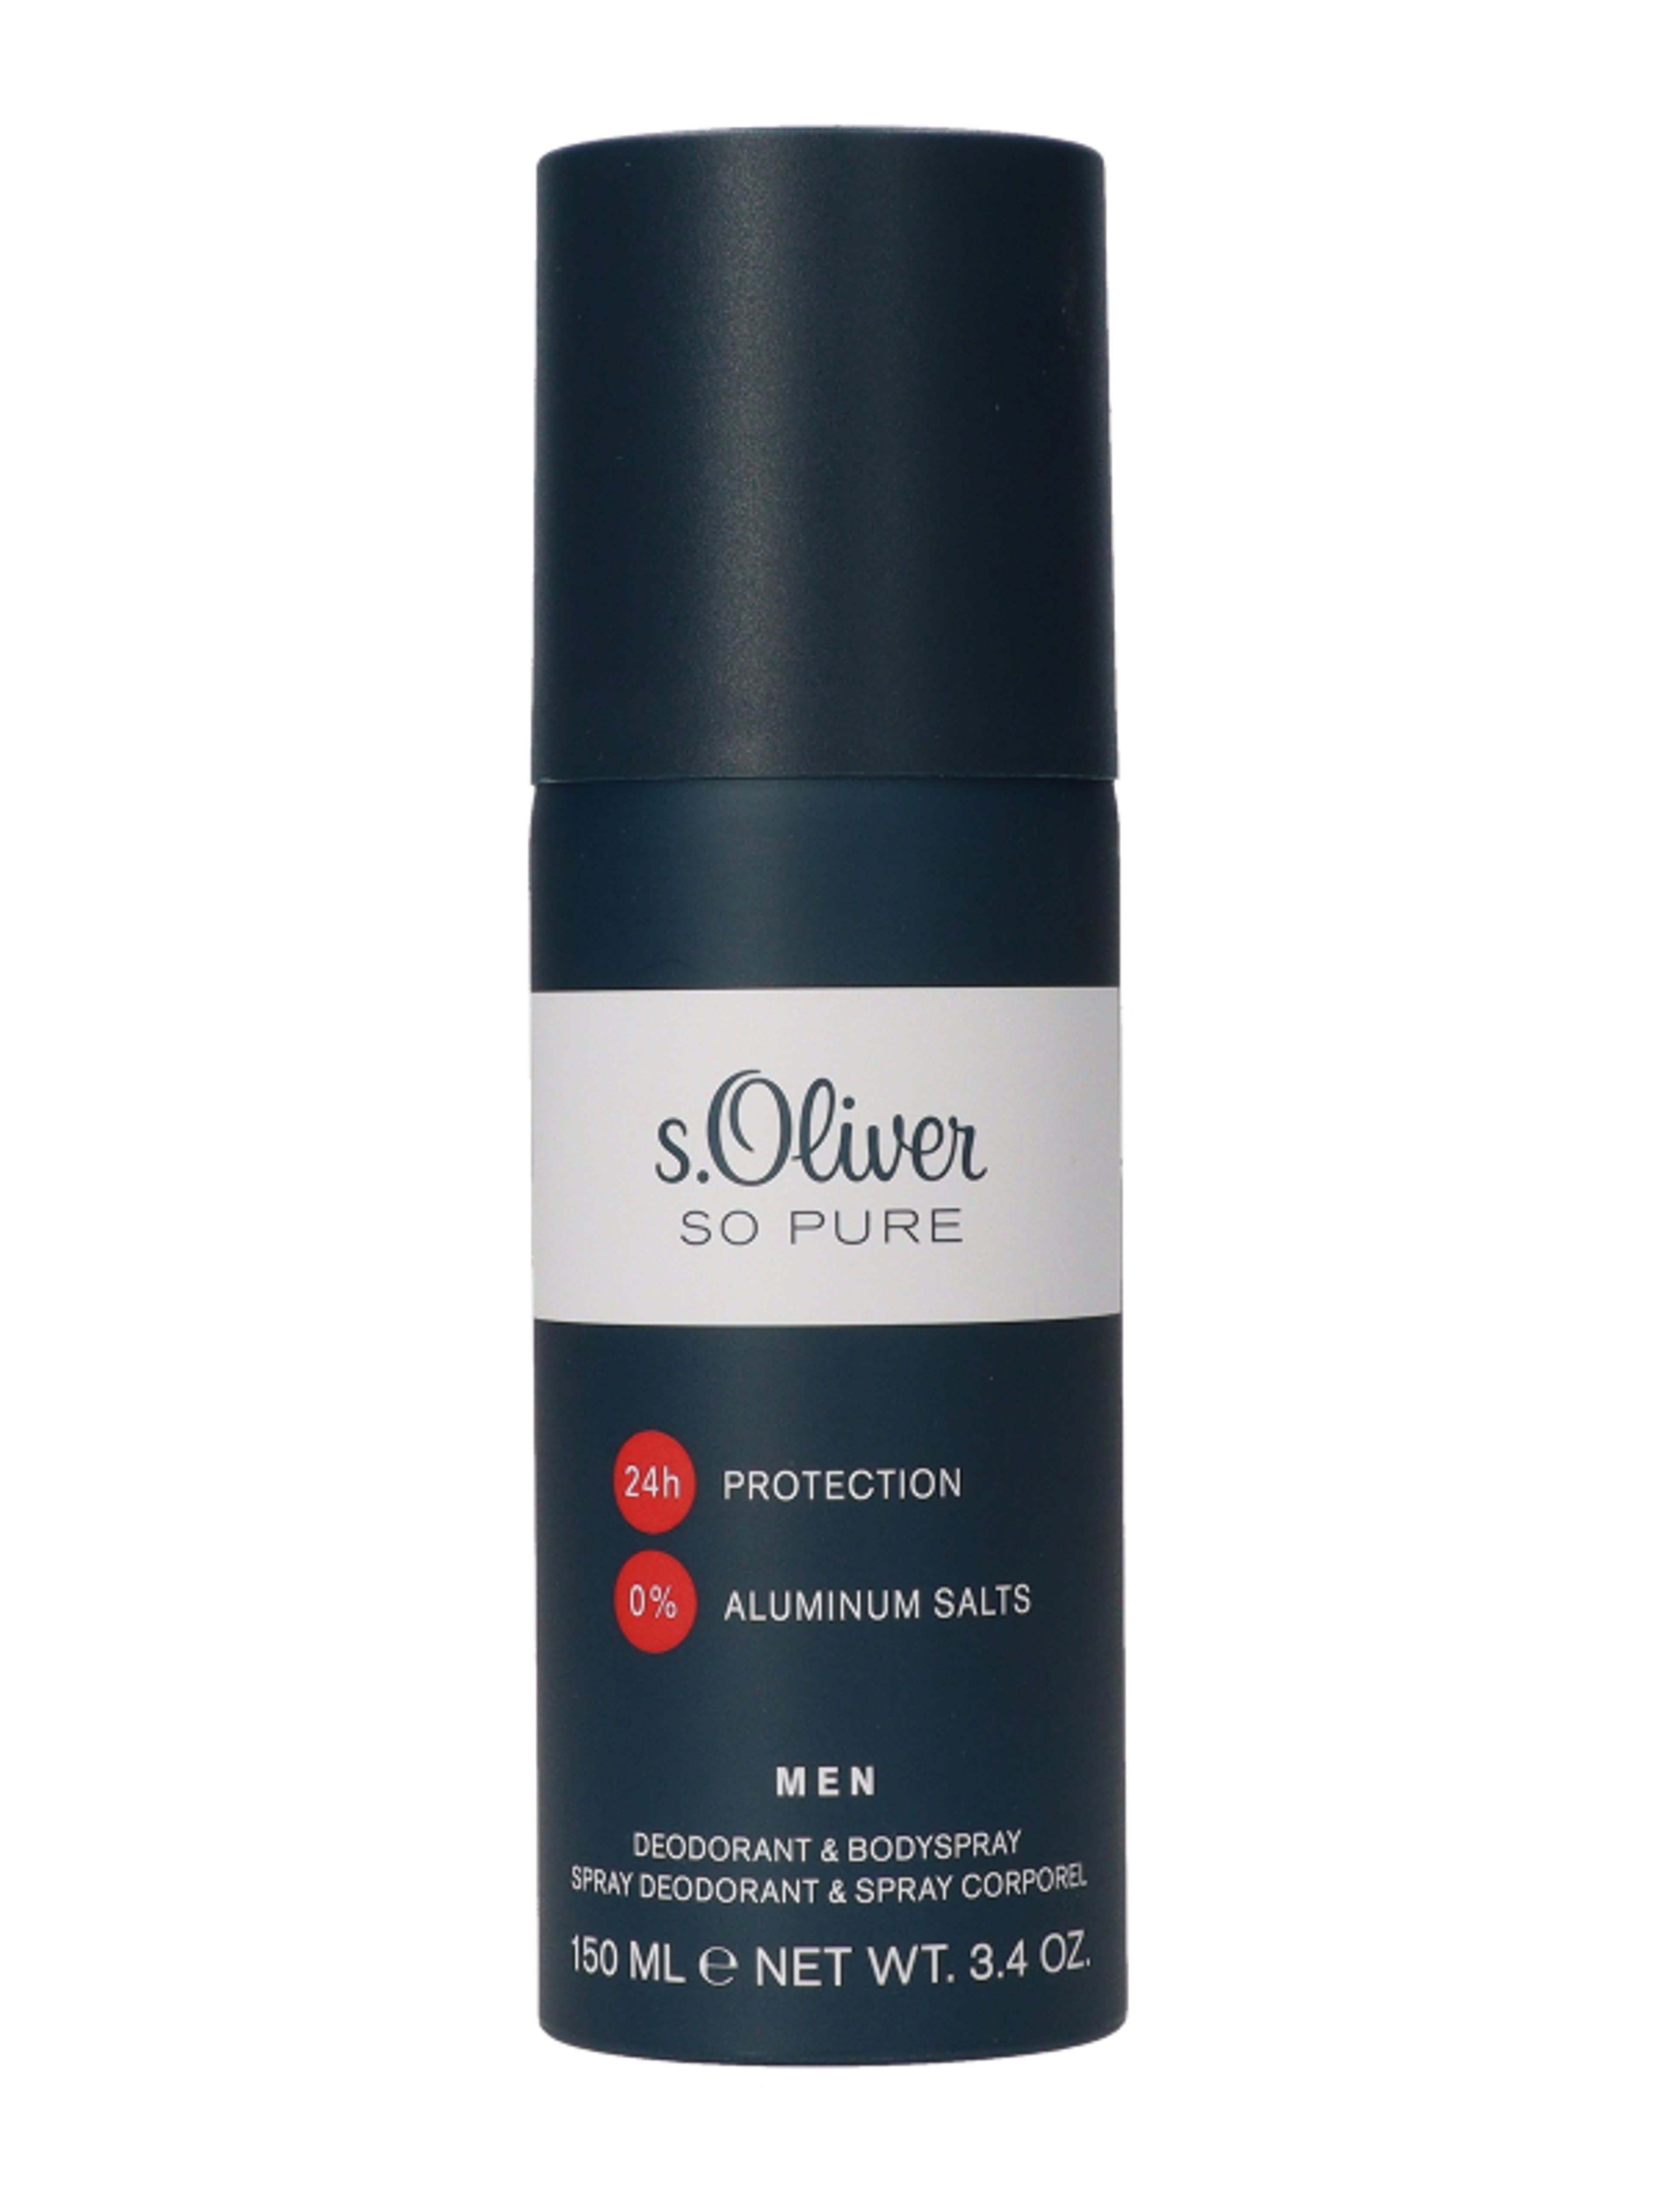 S.oliver deodorant spray so pure man - 150 ml-2